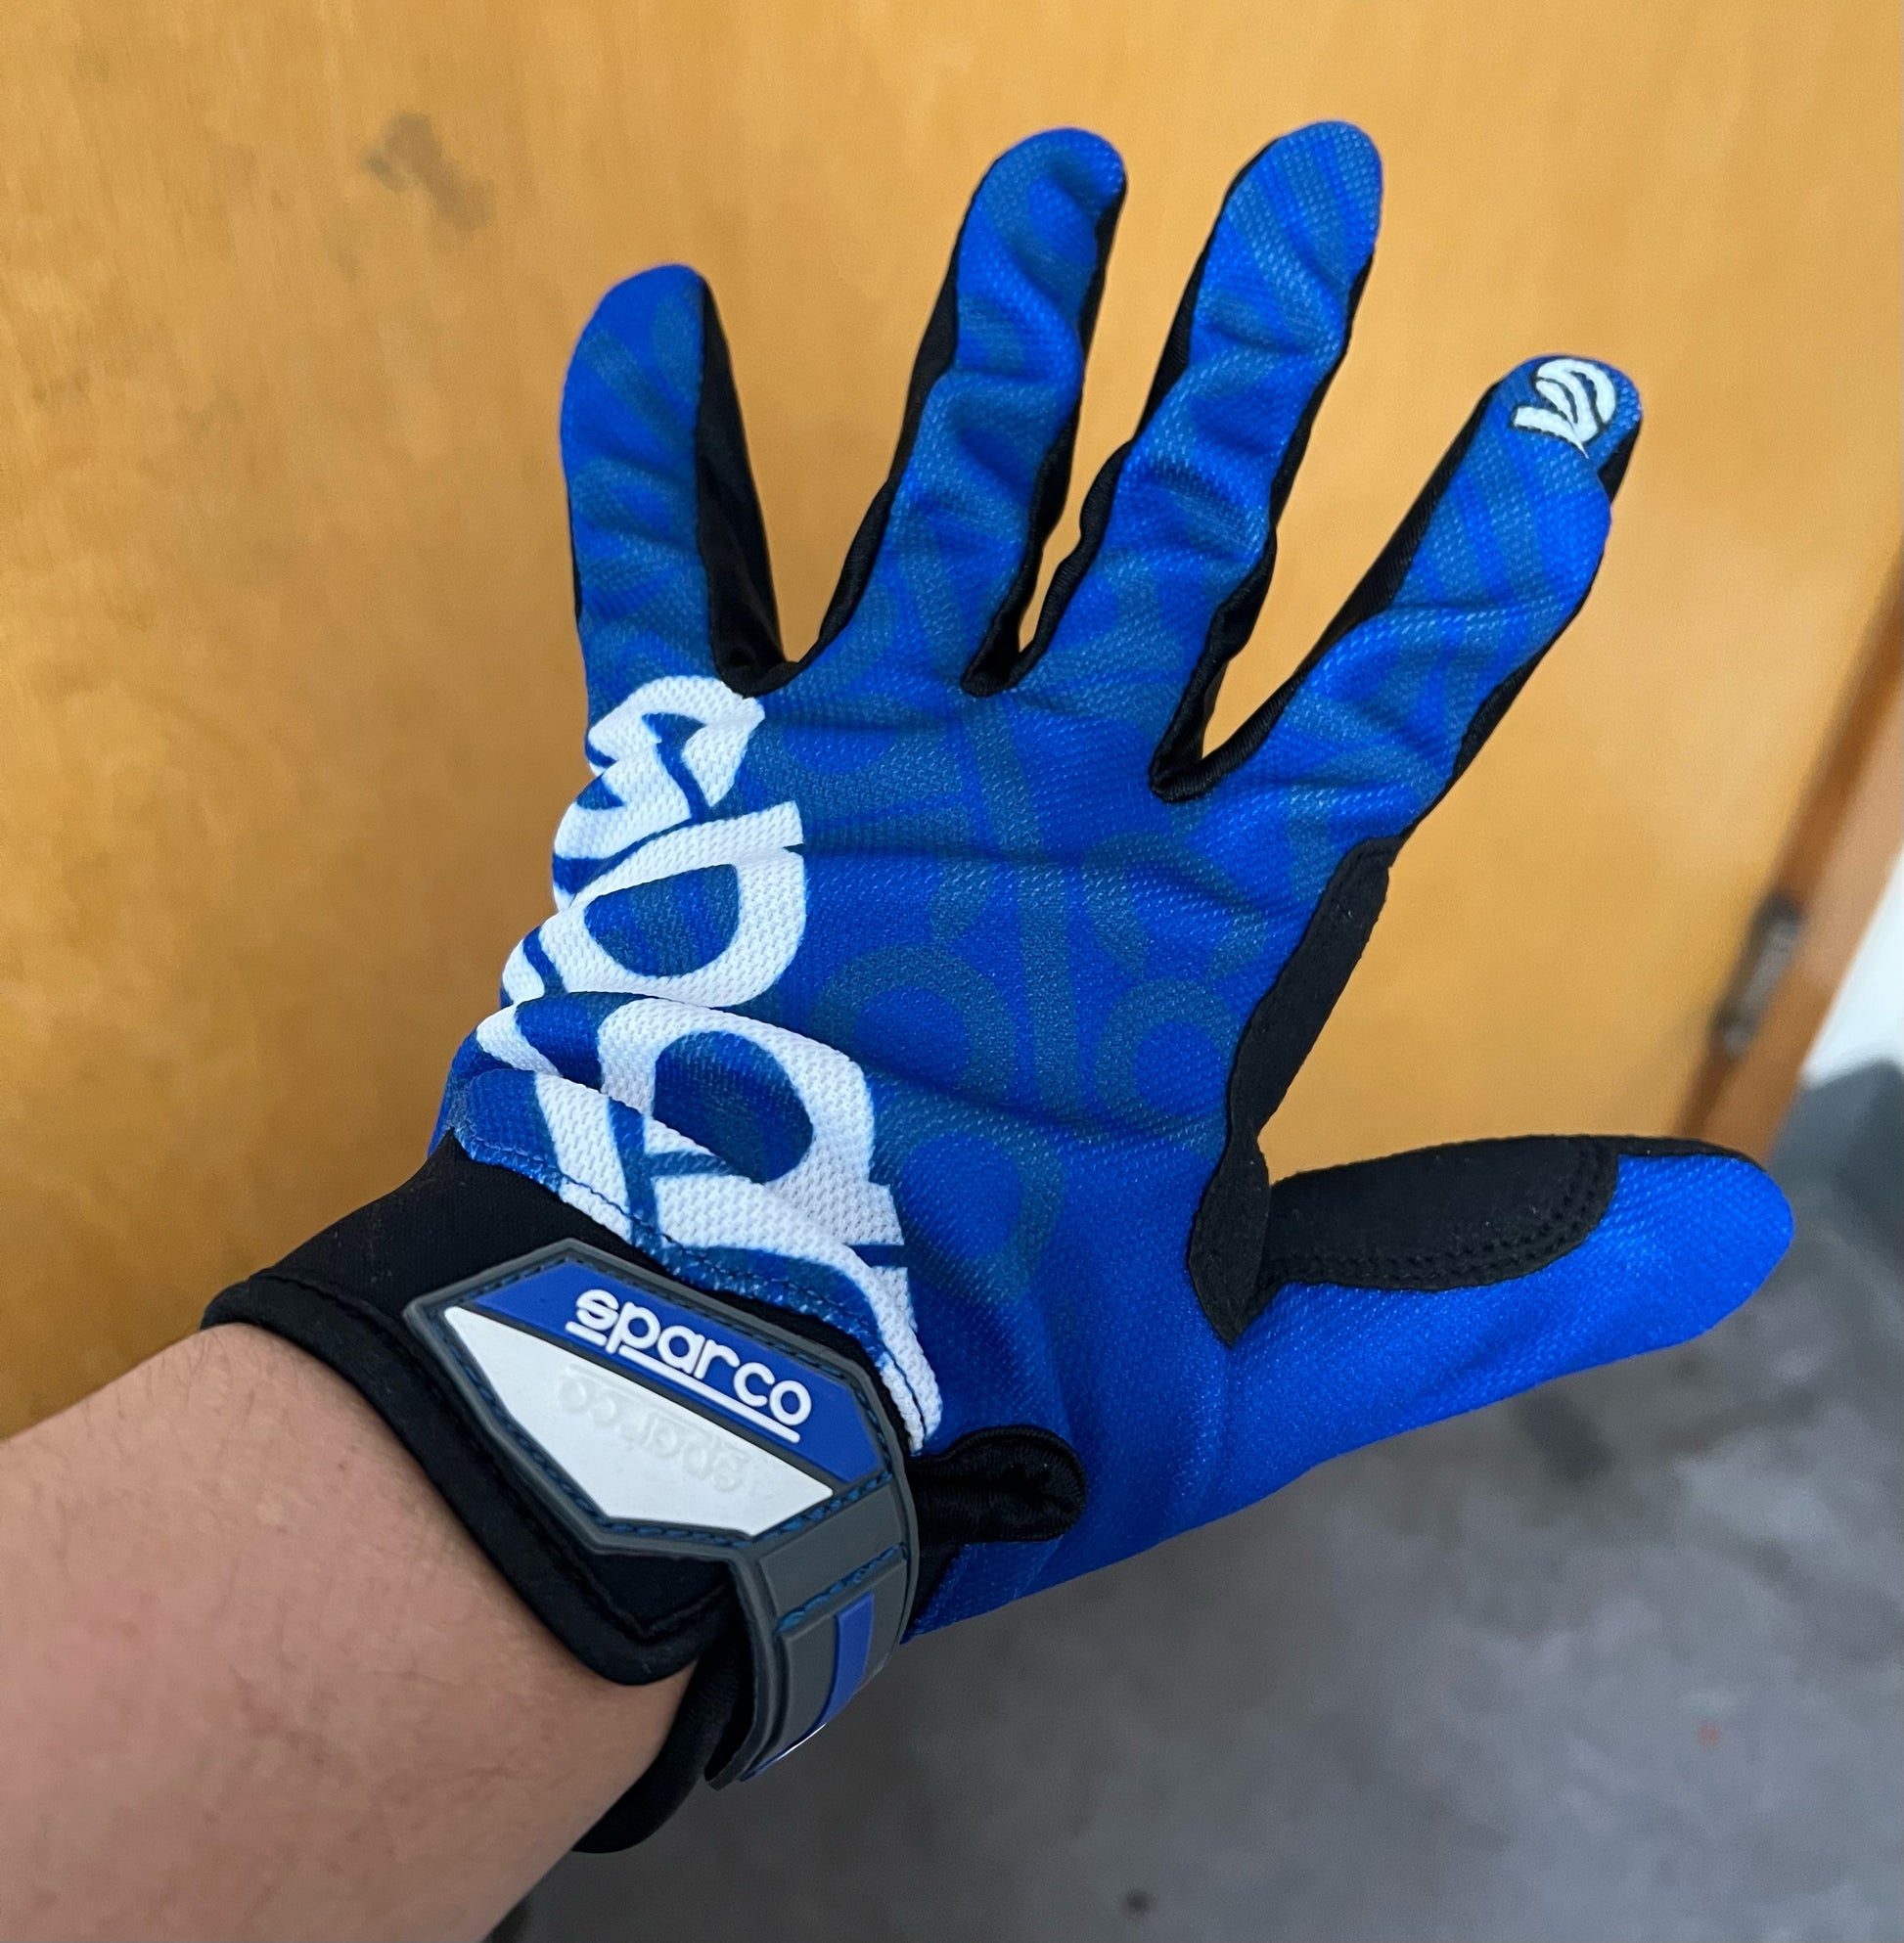 Sparco Meca 3 Pit Gloves at CMS –